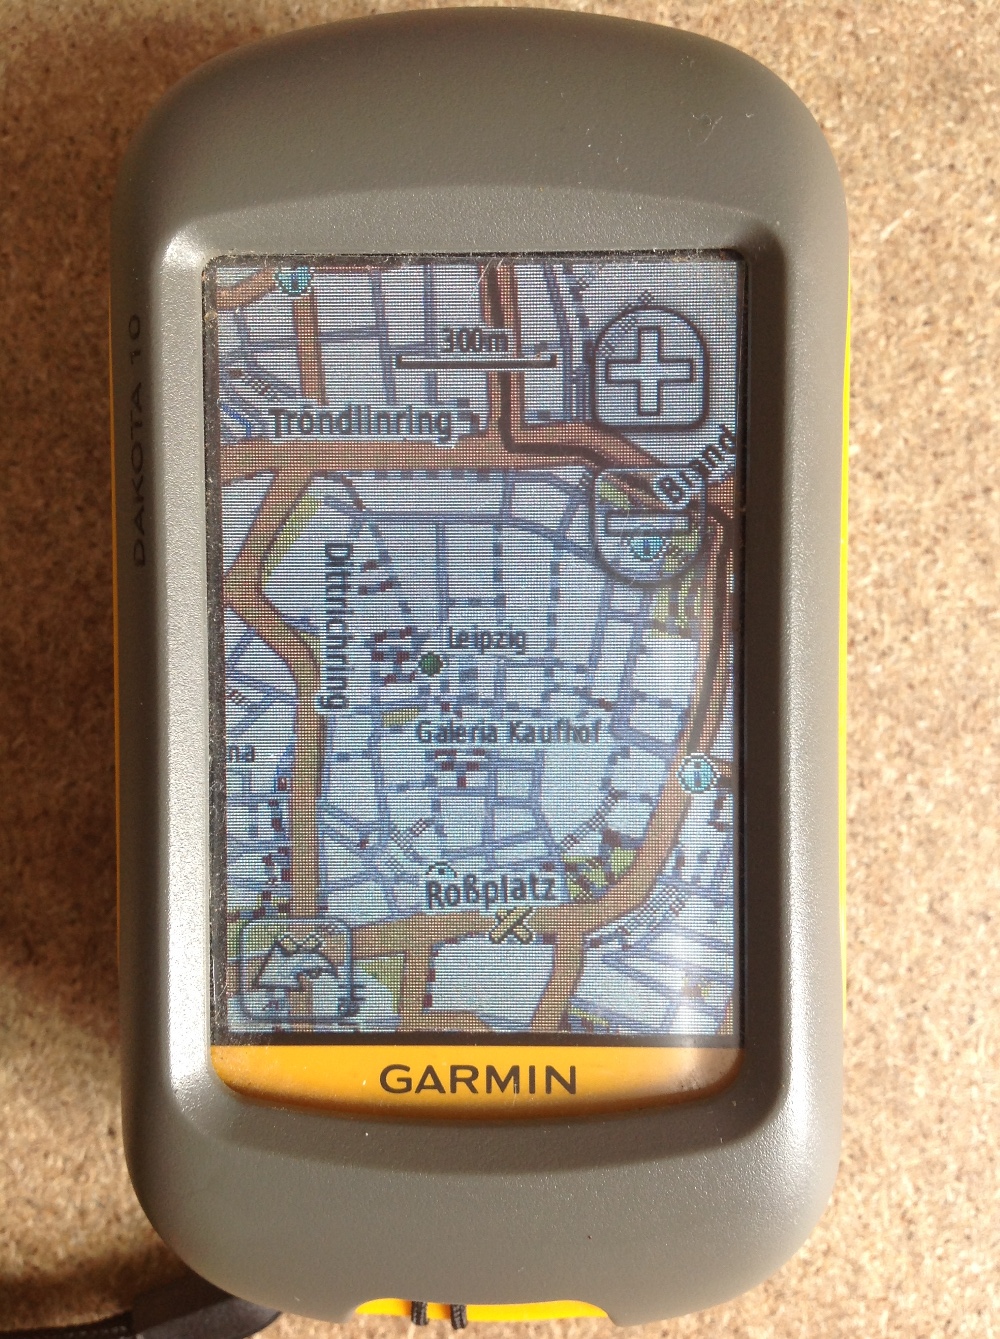 OpenStreetMap-Karten auf dem GARMIN-GPS - Digital Geography